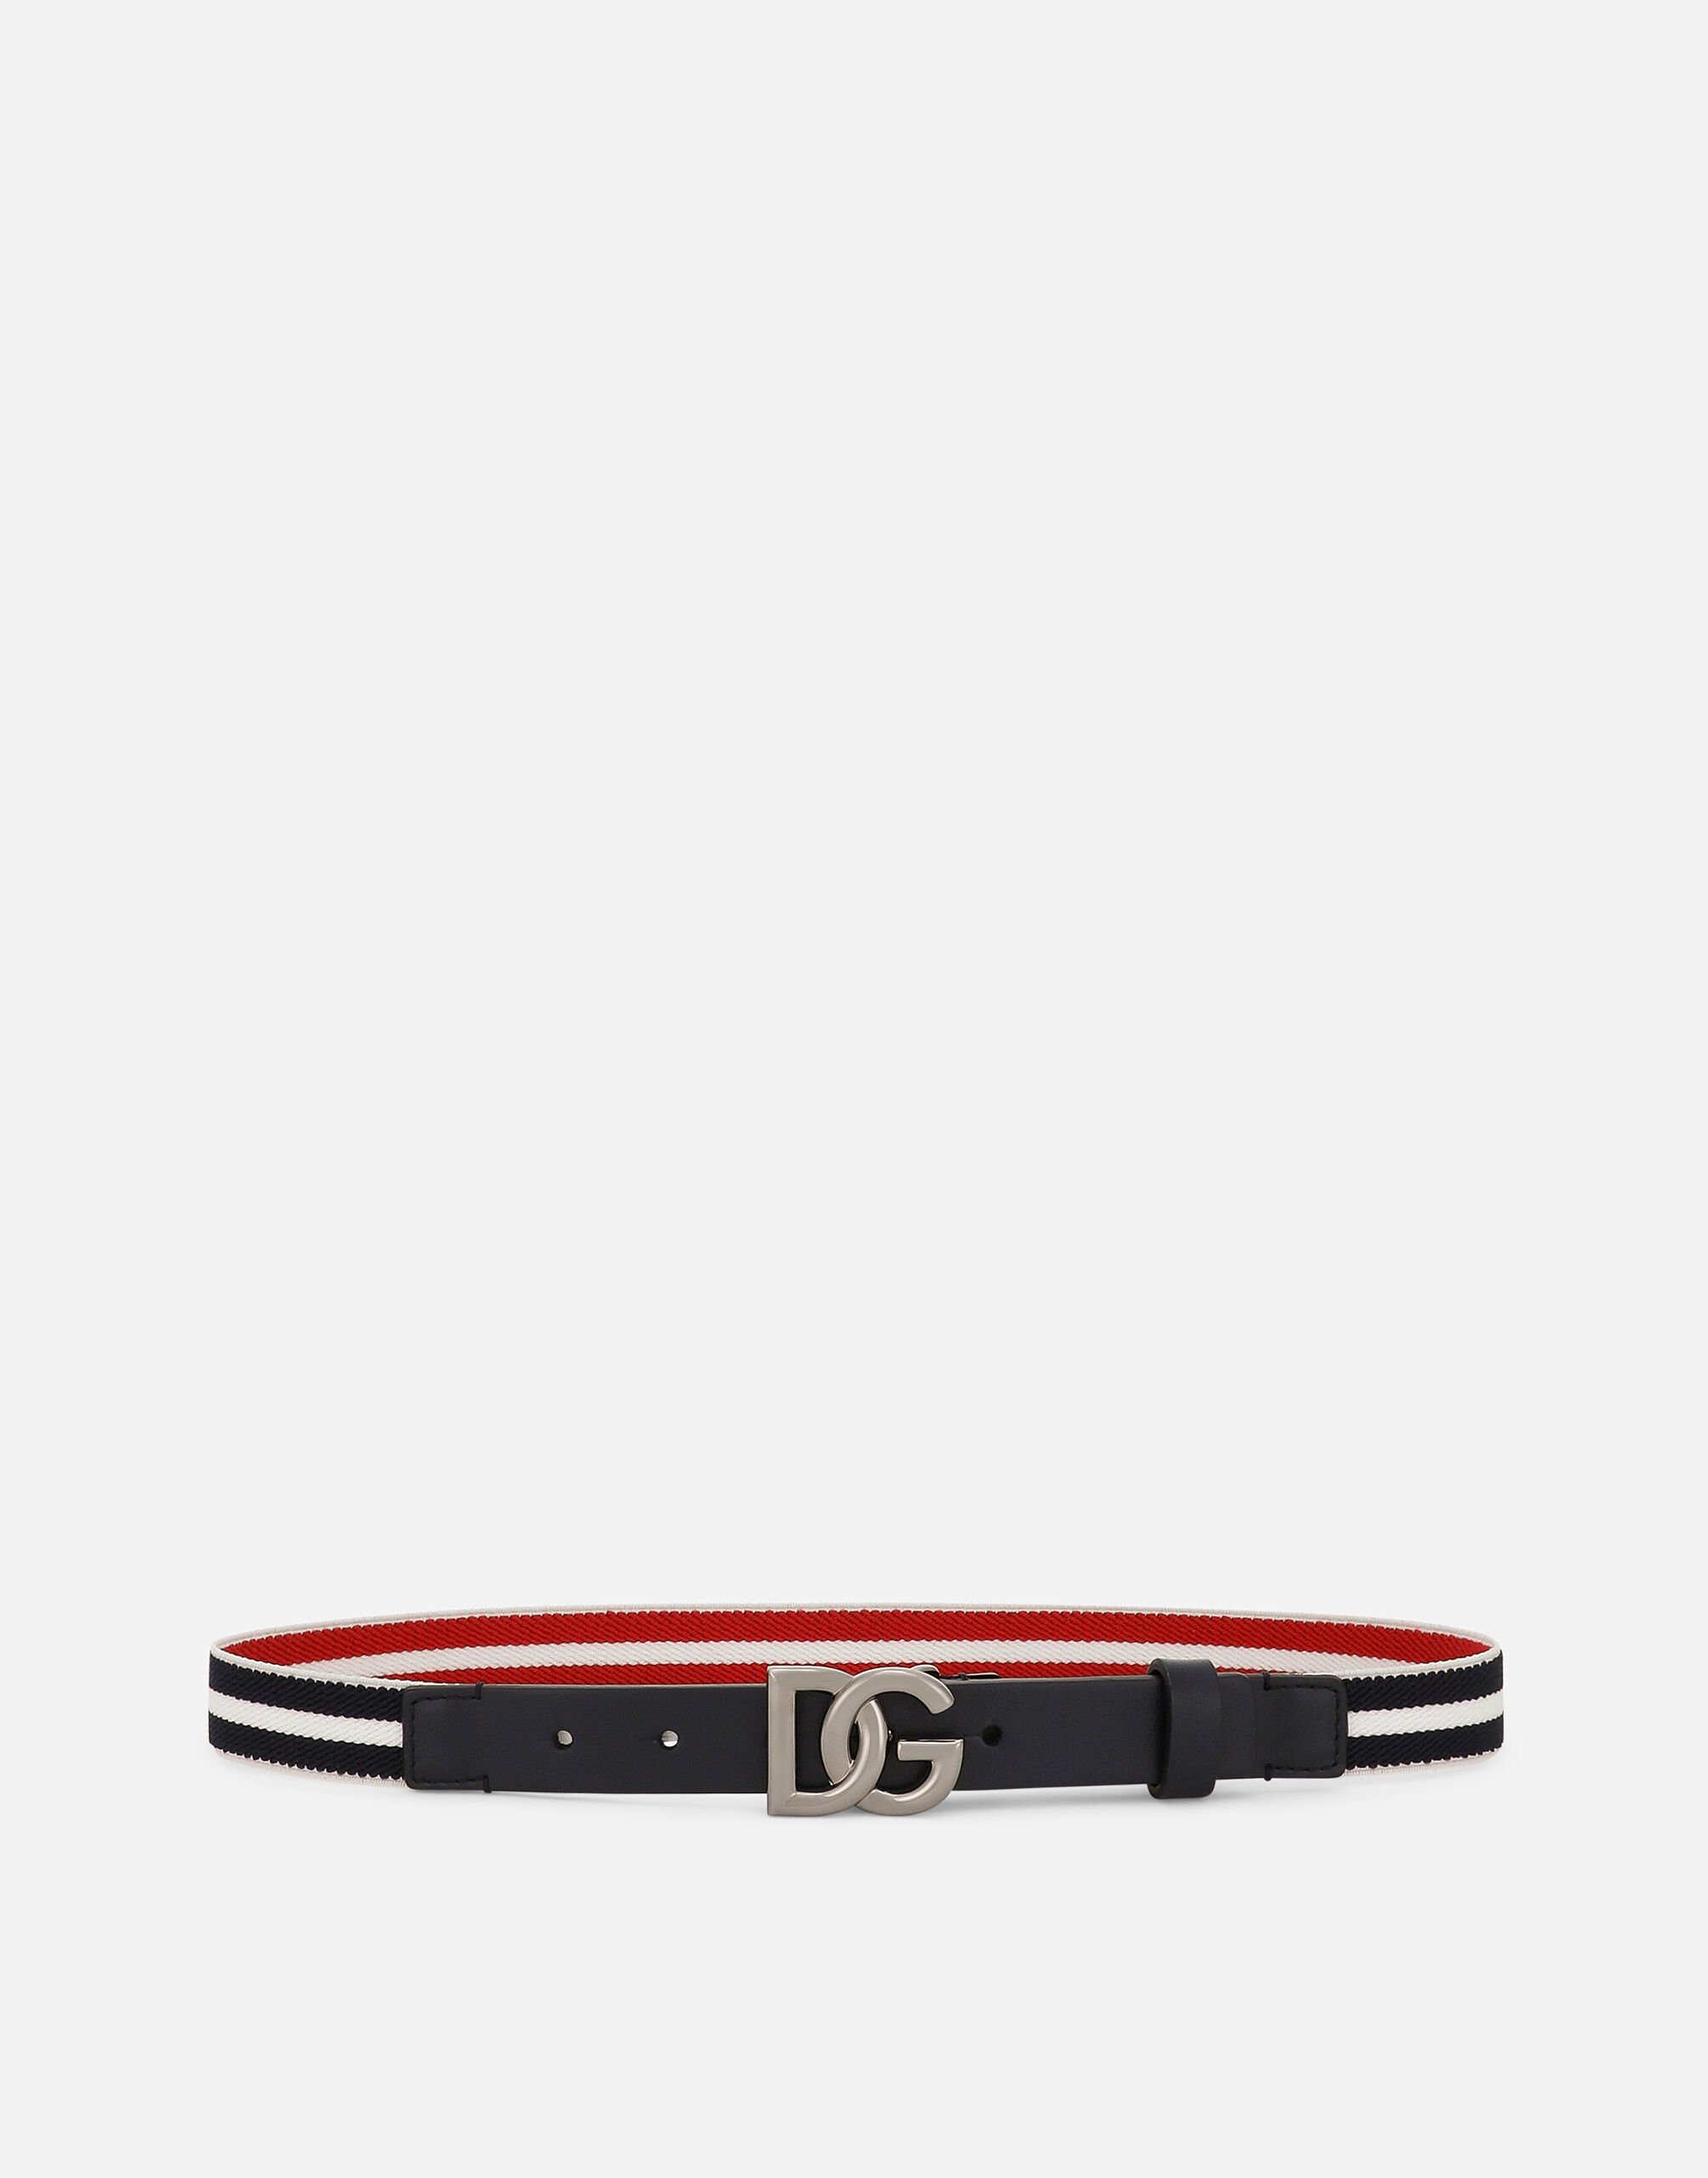 Dolce & Gabbana Stretch belt with DG logo Black EM0125AB205